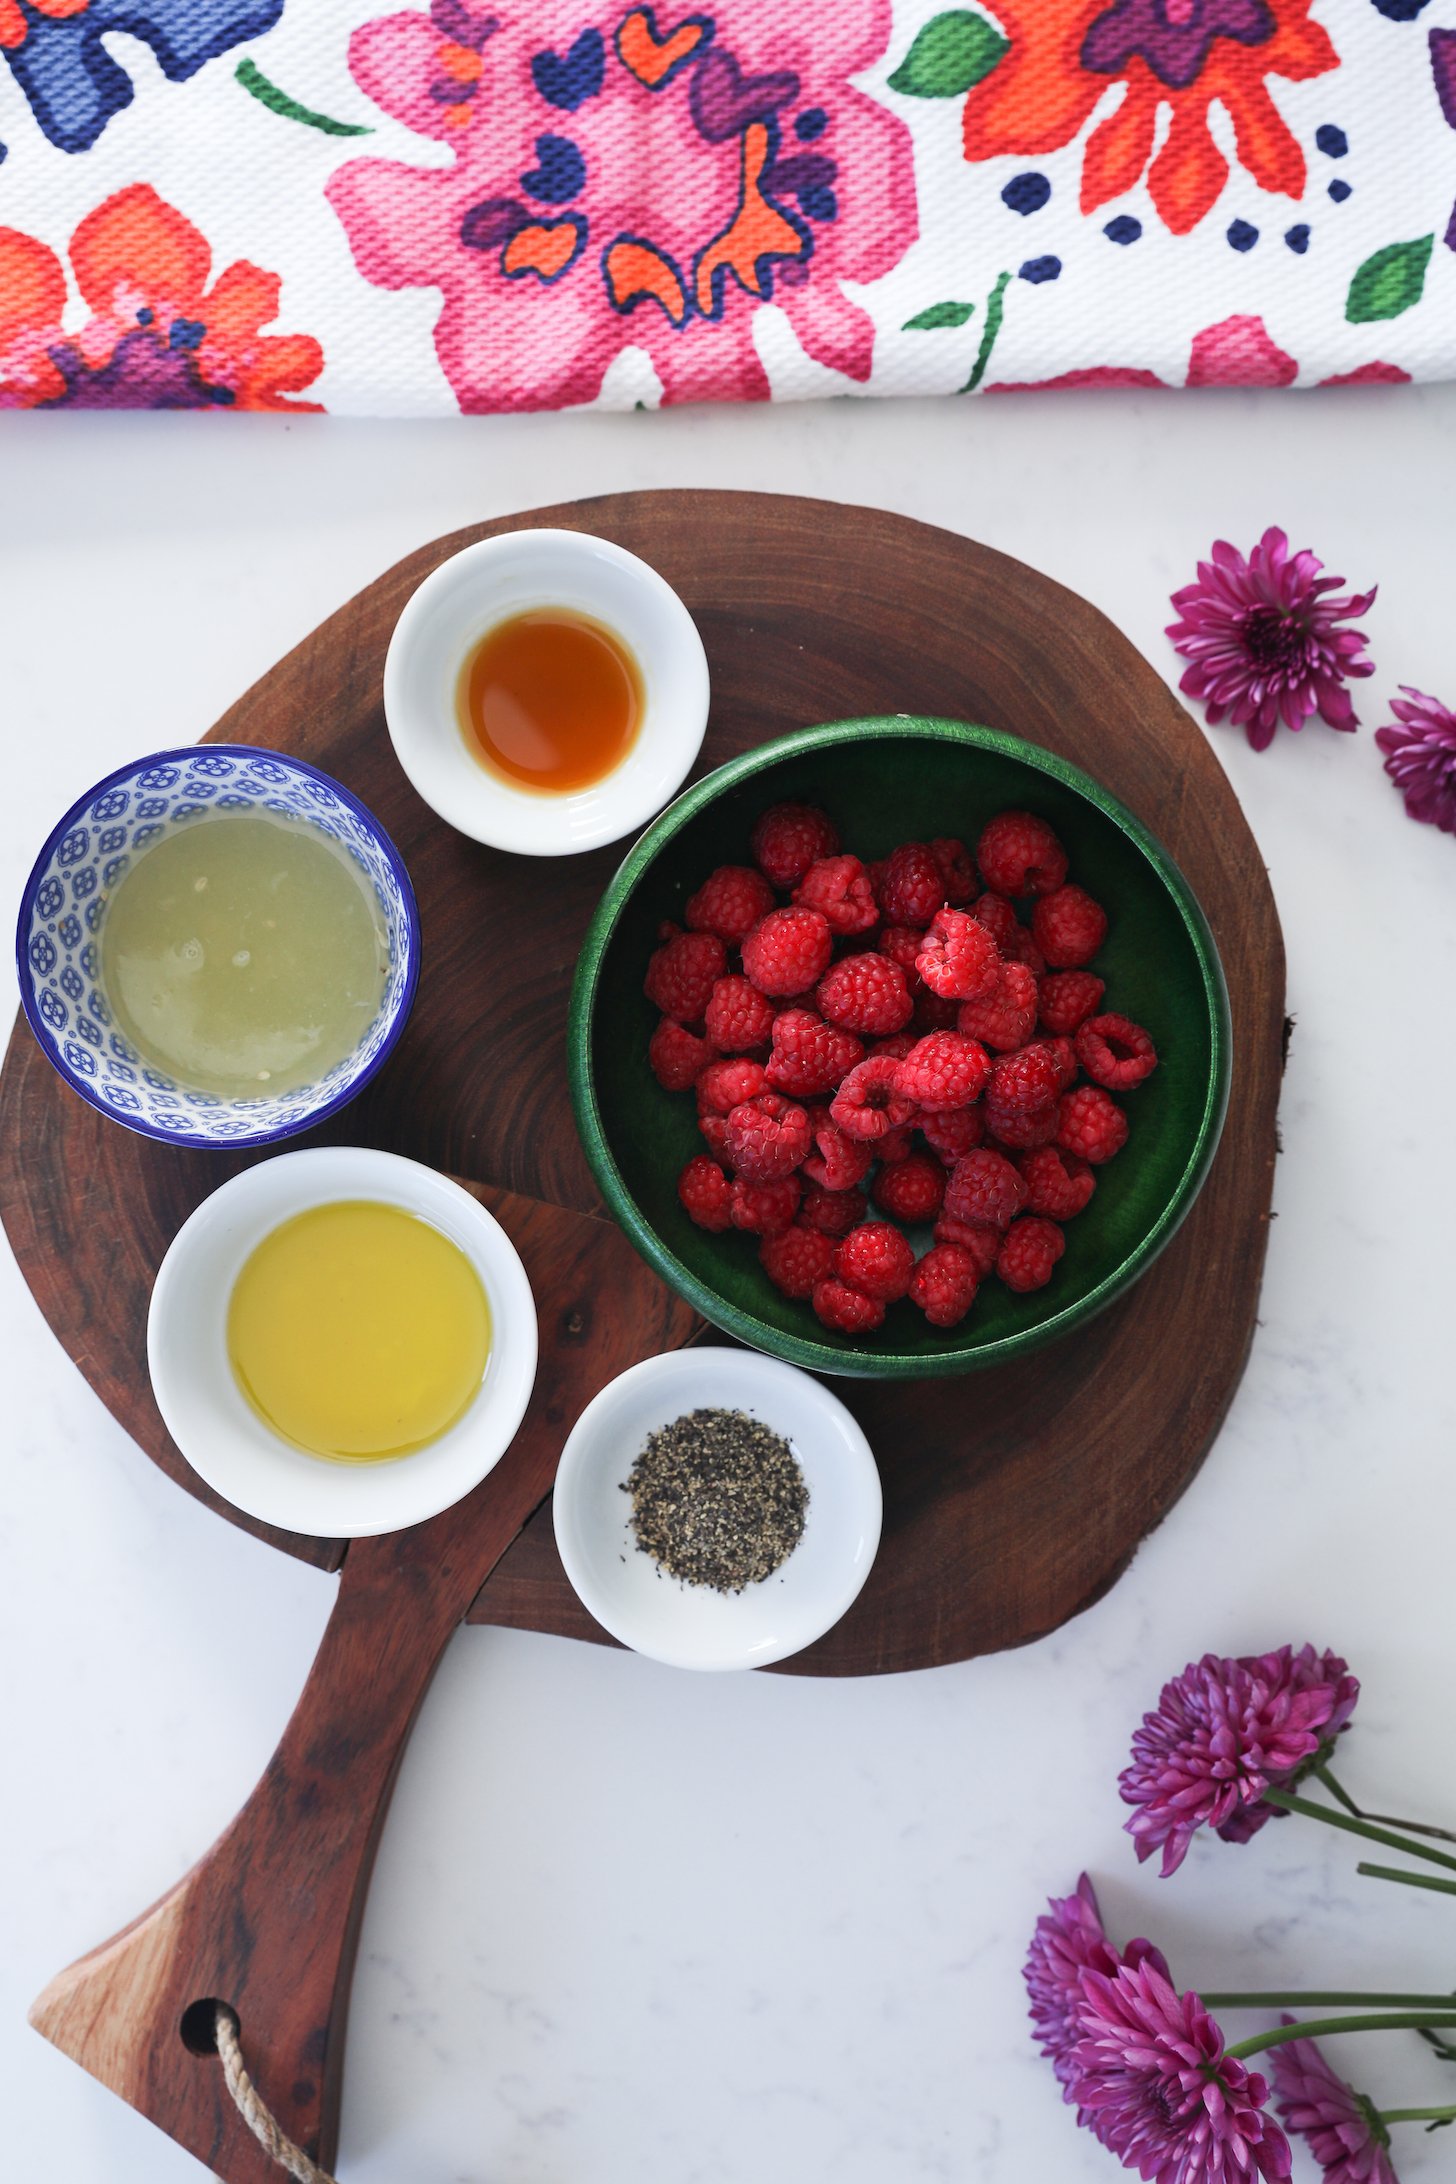 A birdseye view of food ingredients like fresh raspberries, oil, lemon and pepper on a wooden board.